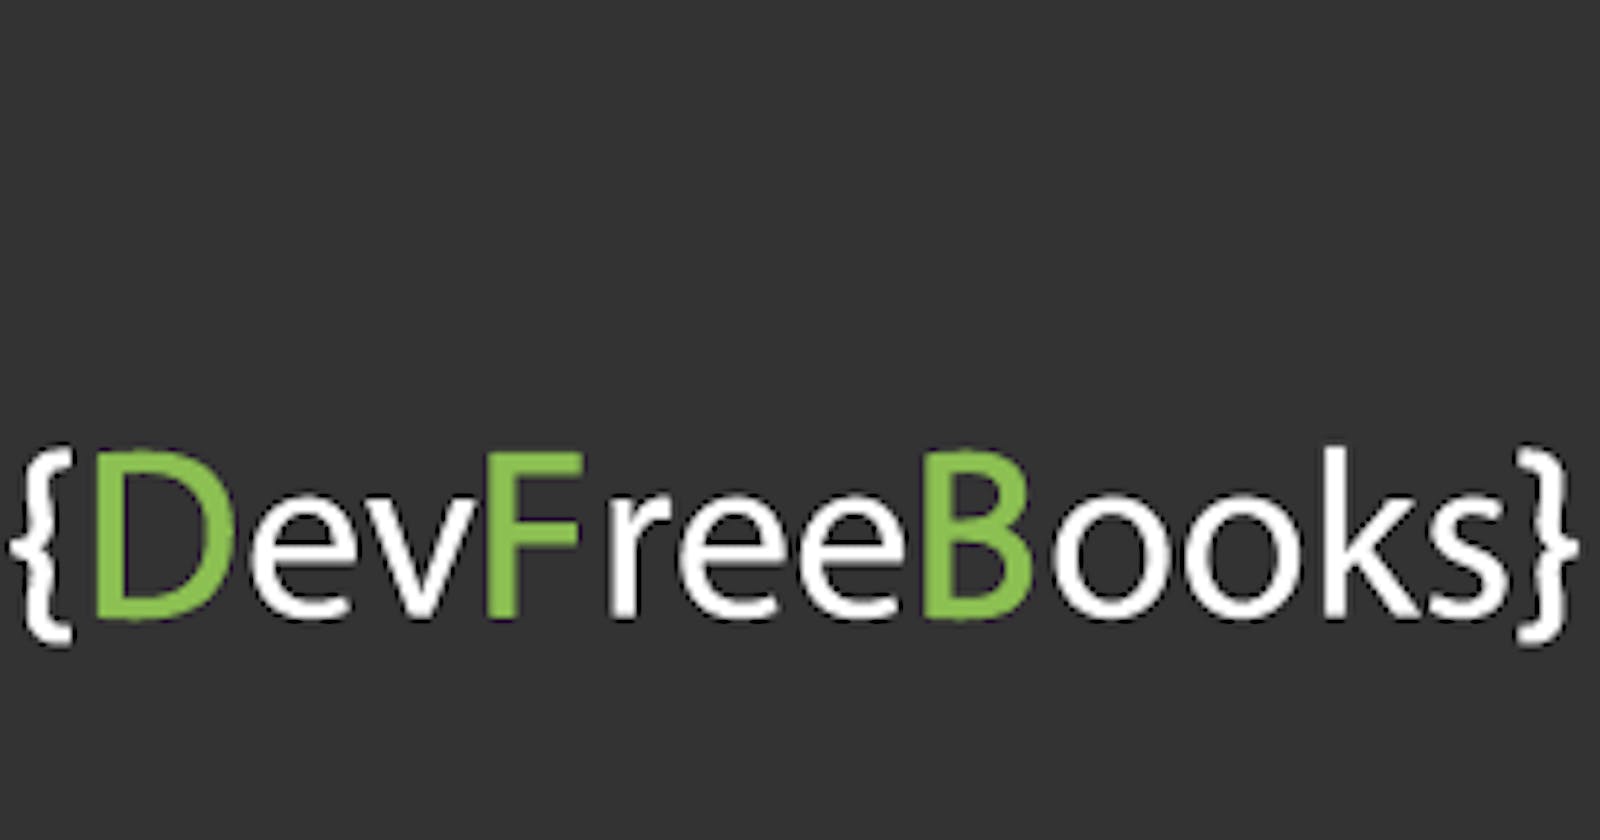 DevFreeBooks